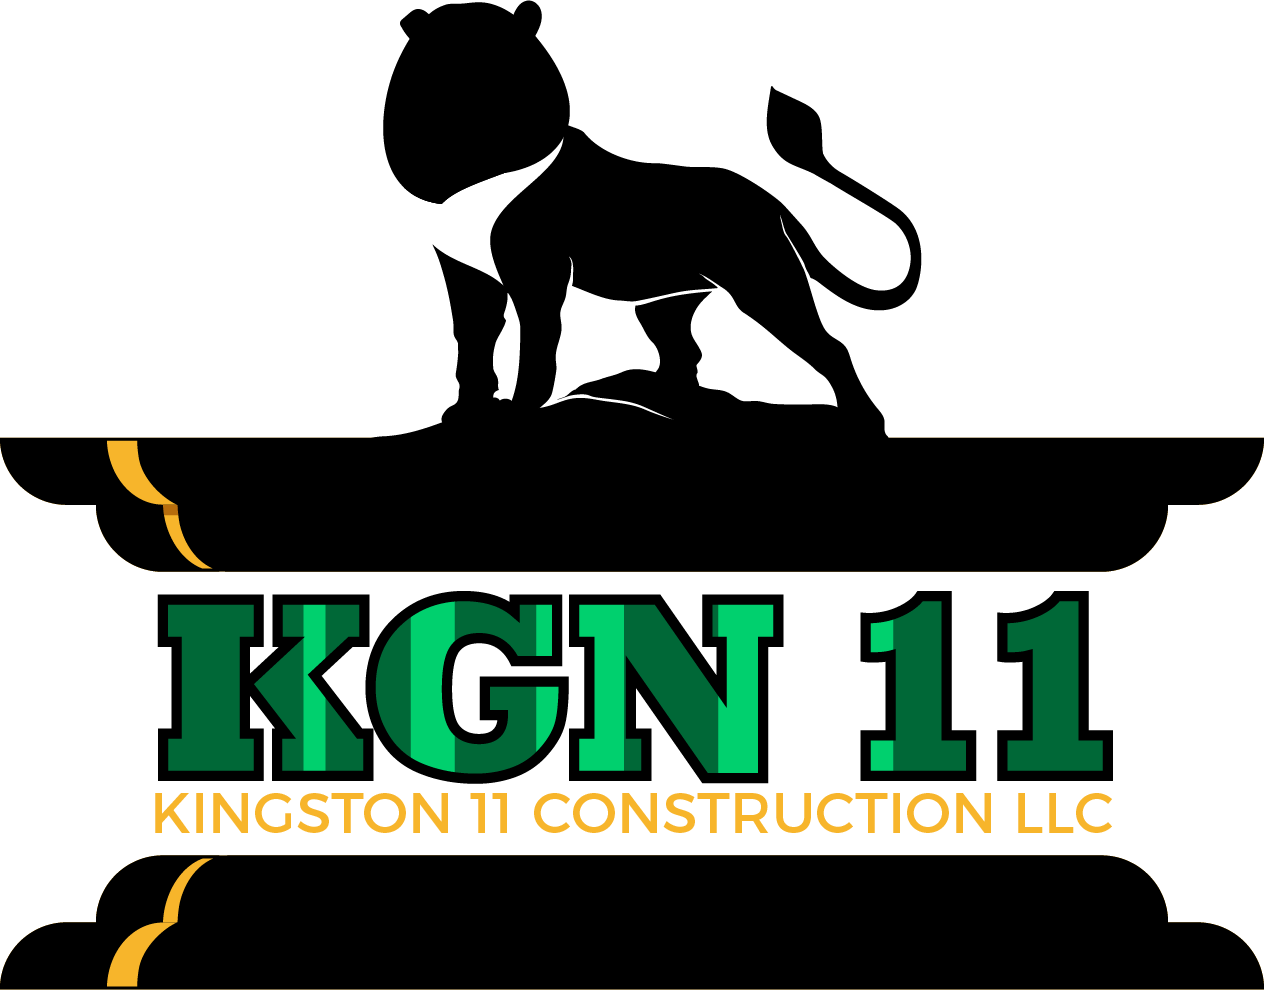 Kingston 11 Construction, LLC Logo